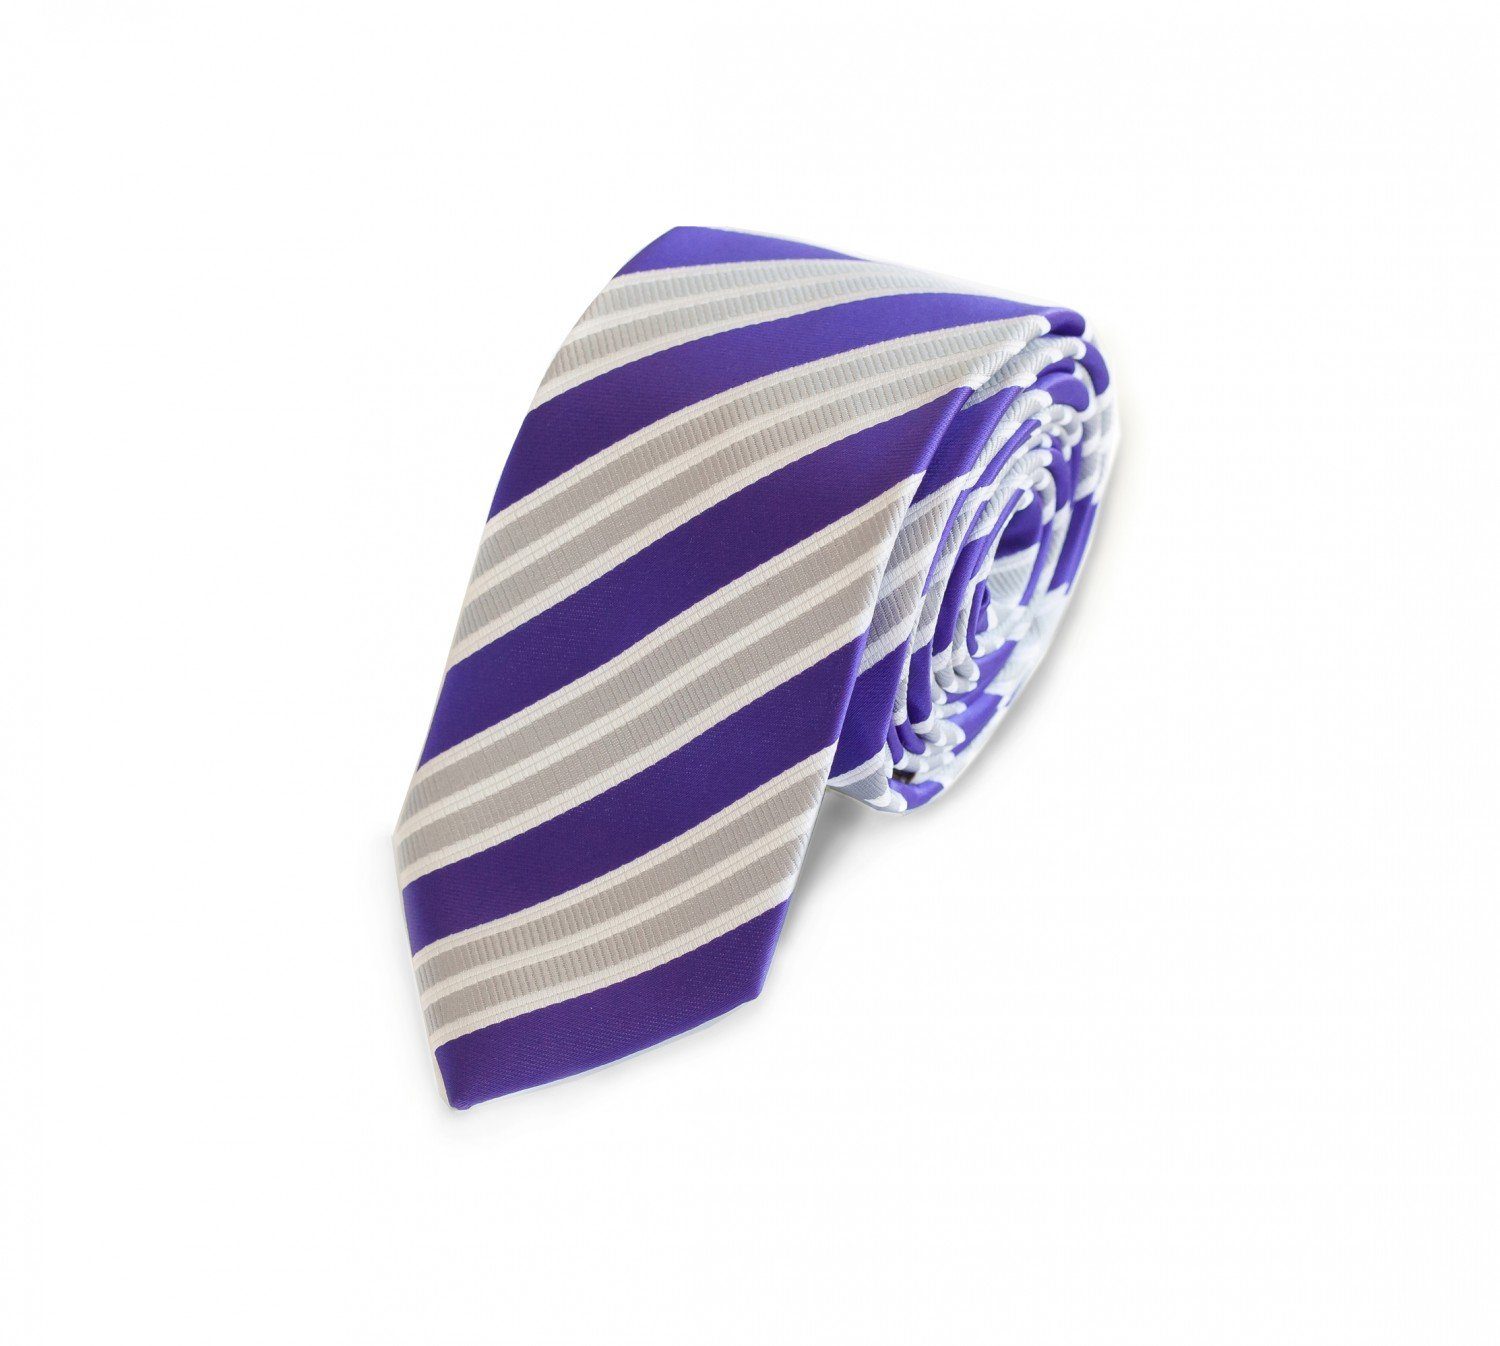 Schmale braune 6cm Business Krawatte Fabio Farini edel blau weiß gestreift 